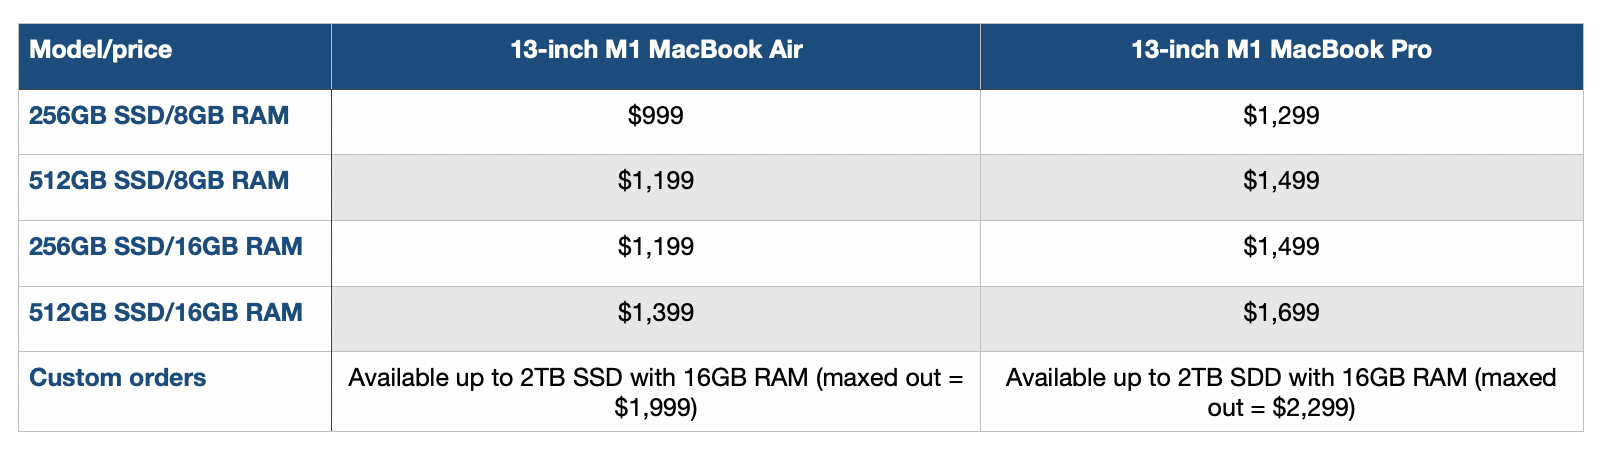 M1 MacBook Air vs Pro price comparison